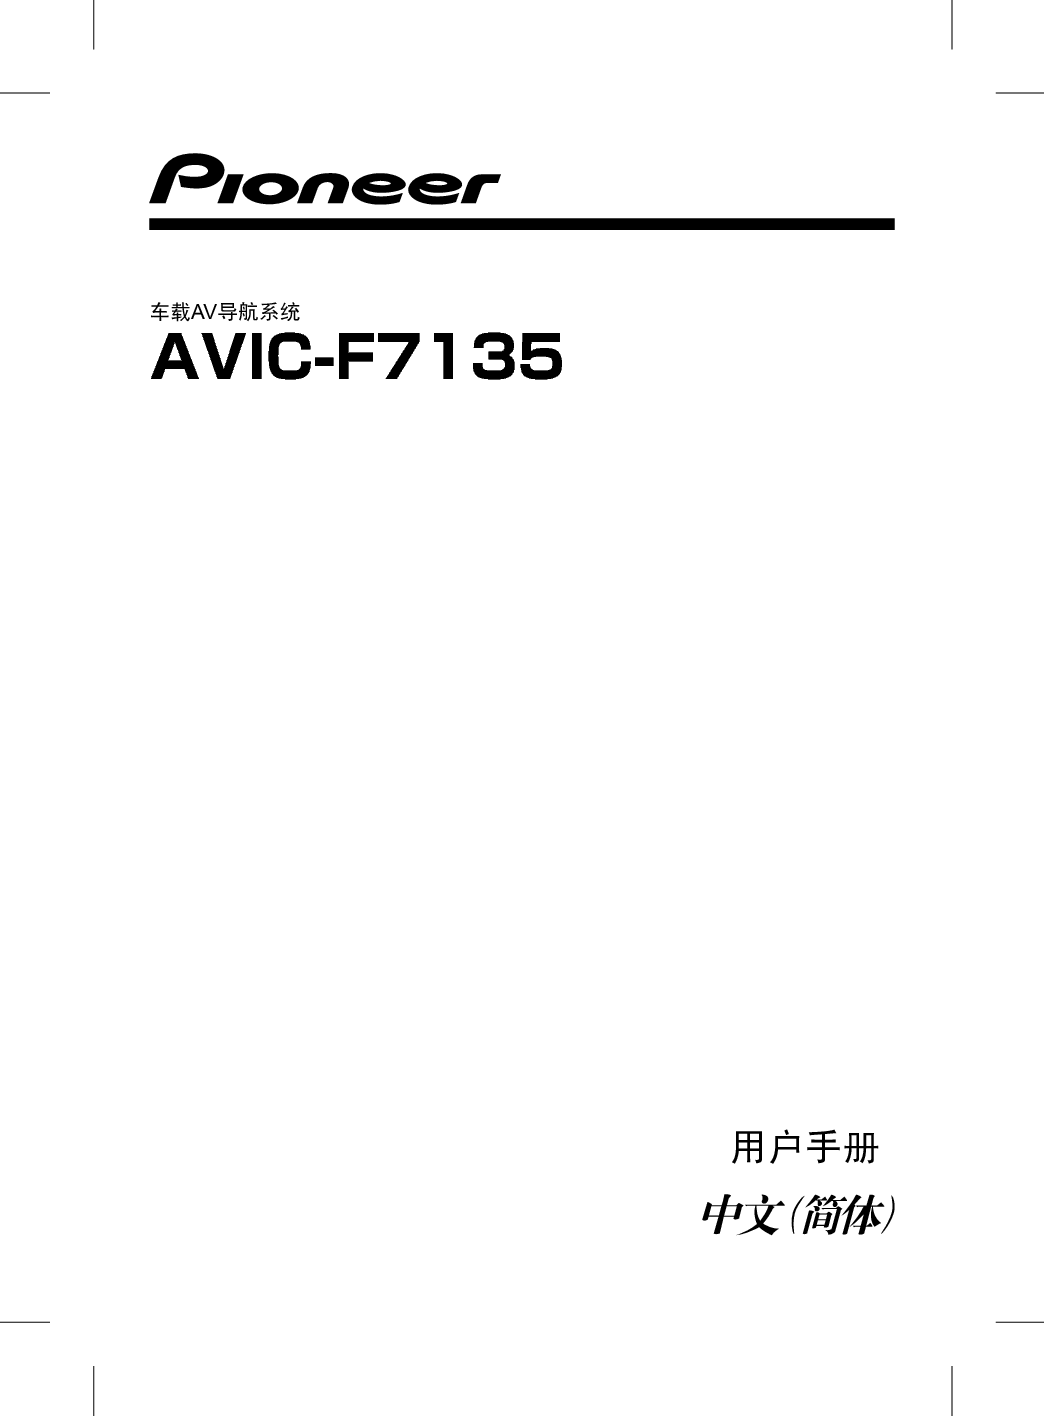 先锋 Pioneer AVIC-F7135 使用说明书 封面